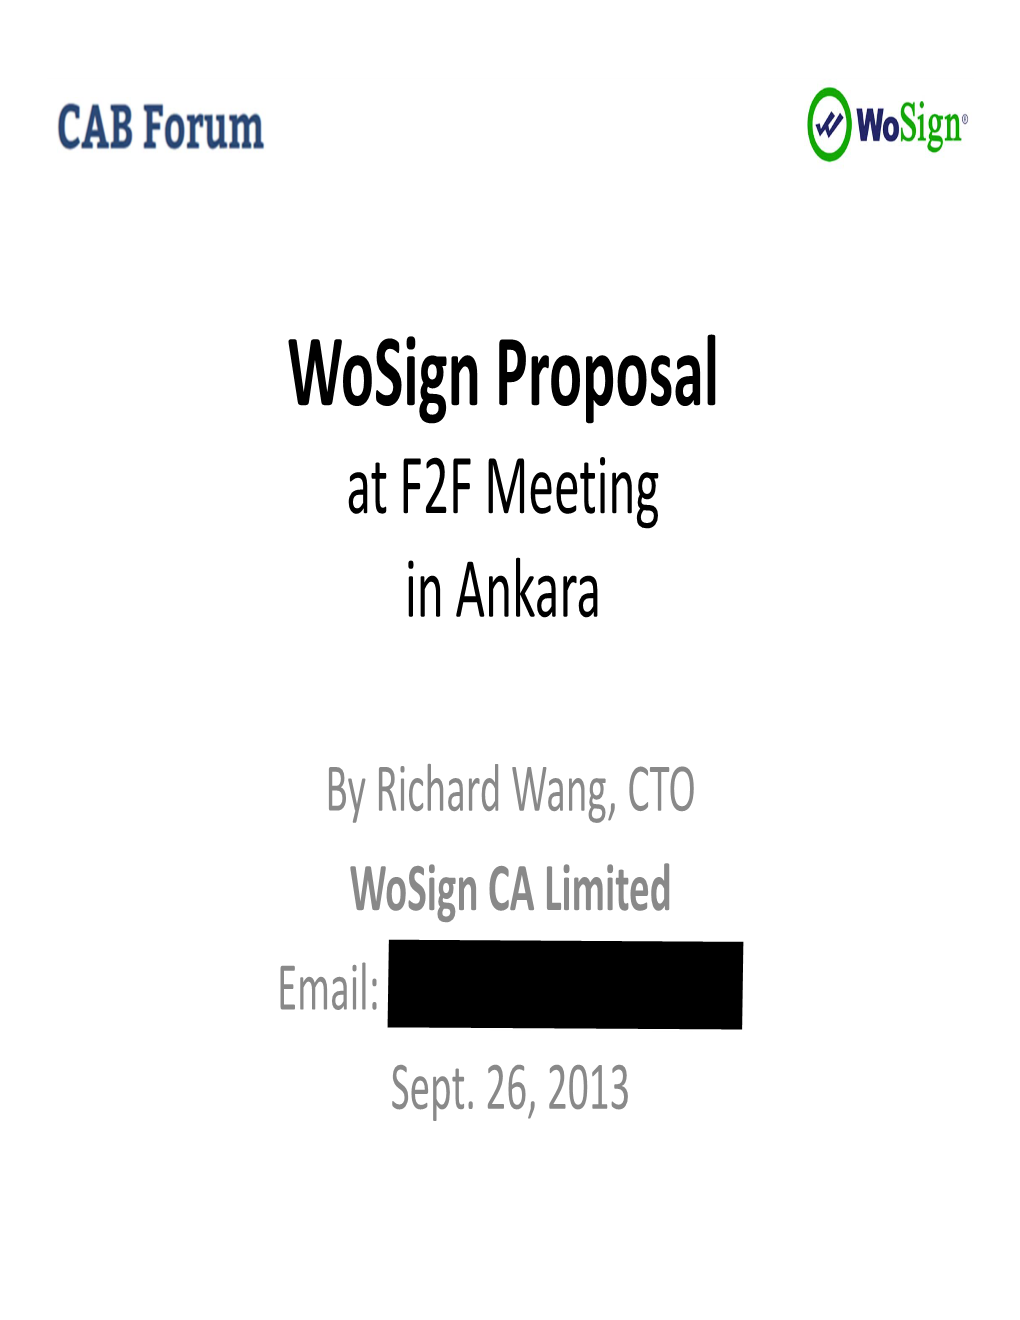 Wosign Proposal at F2F Meeting in Ankara